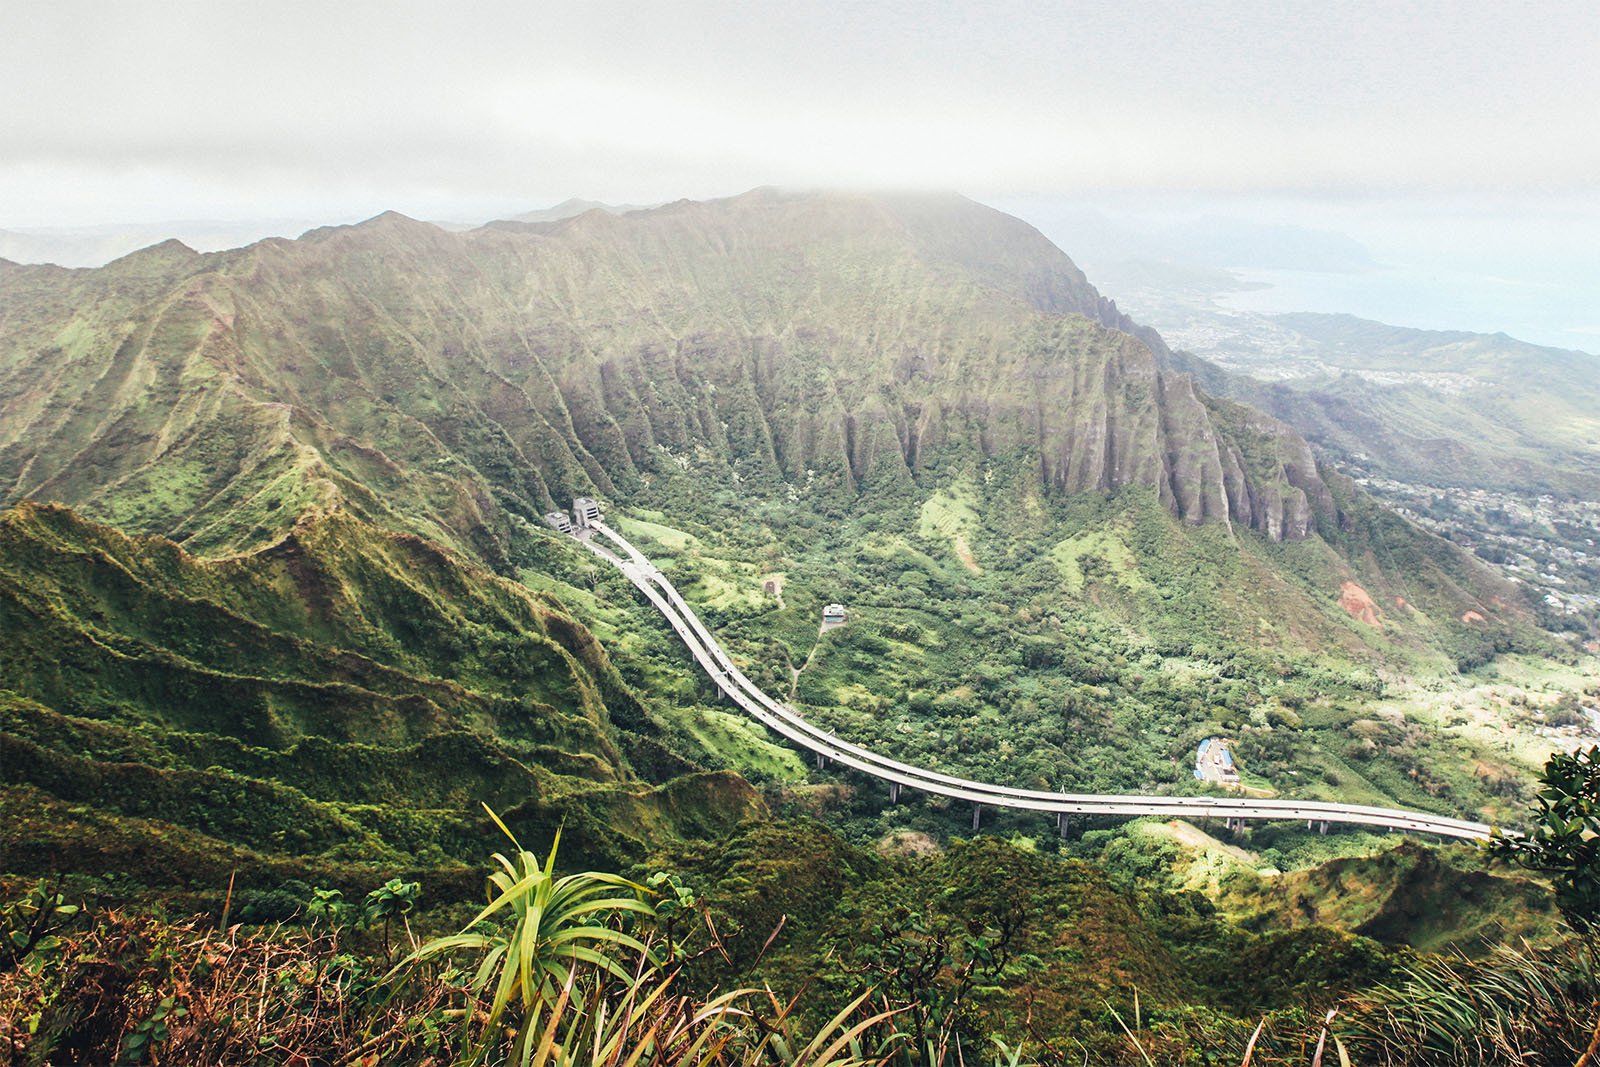 A winding road cuts through lush, green mountain terrain, overlooking distant ocean views under a cloudy sky.